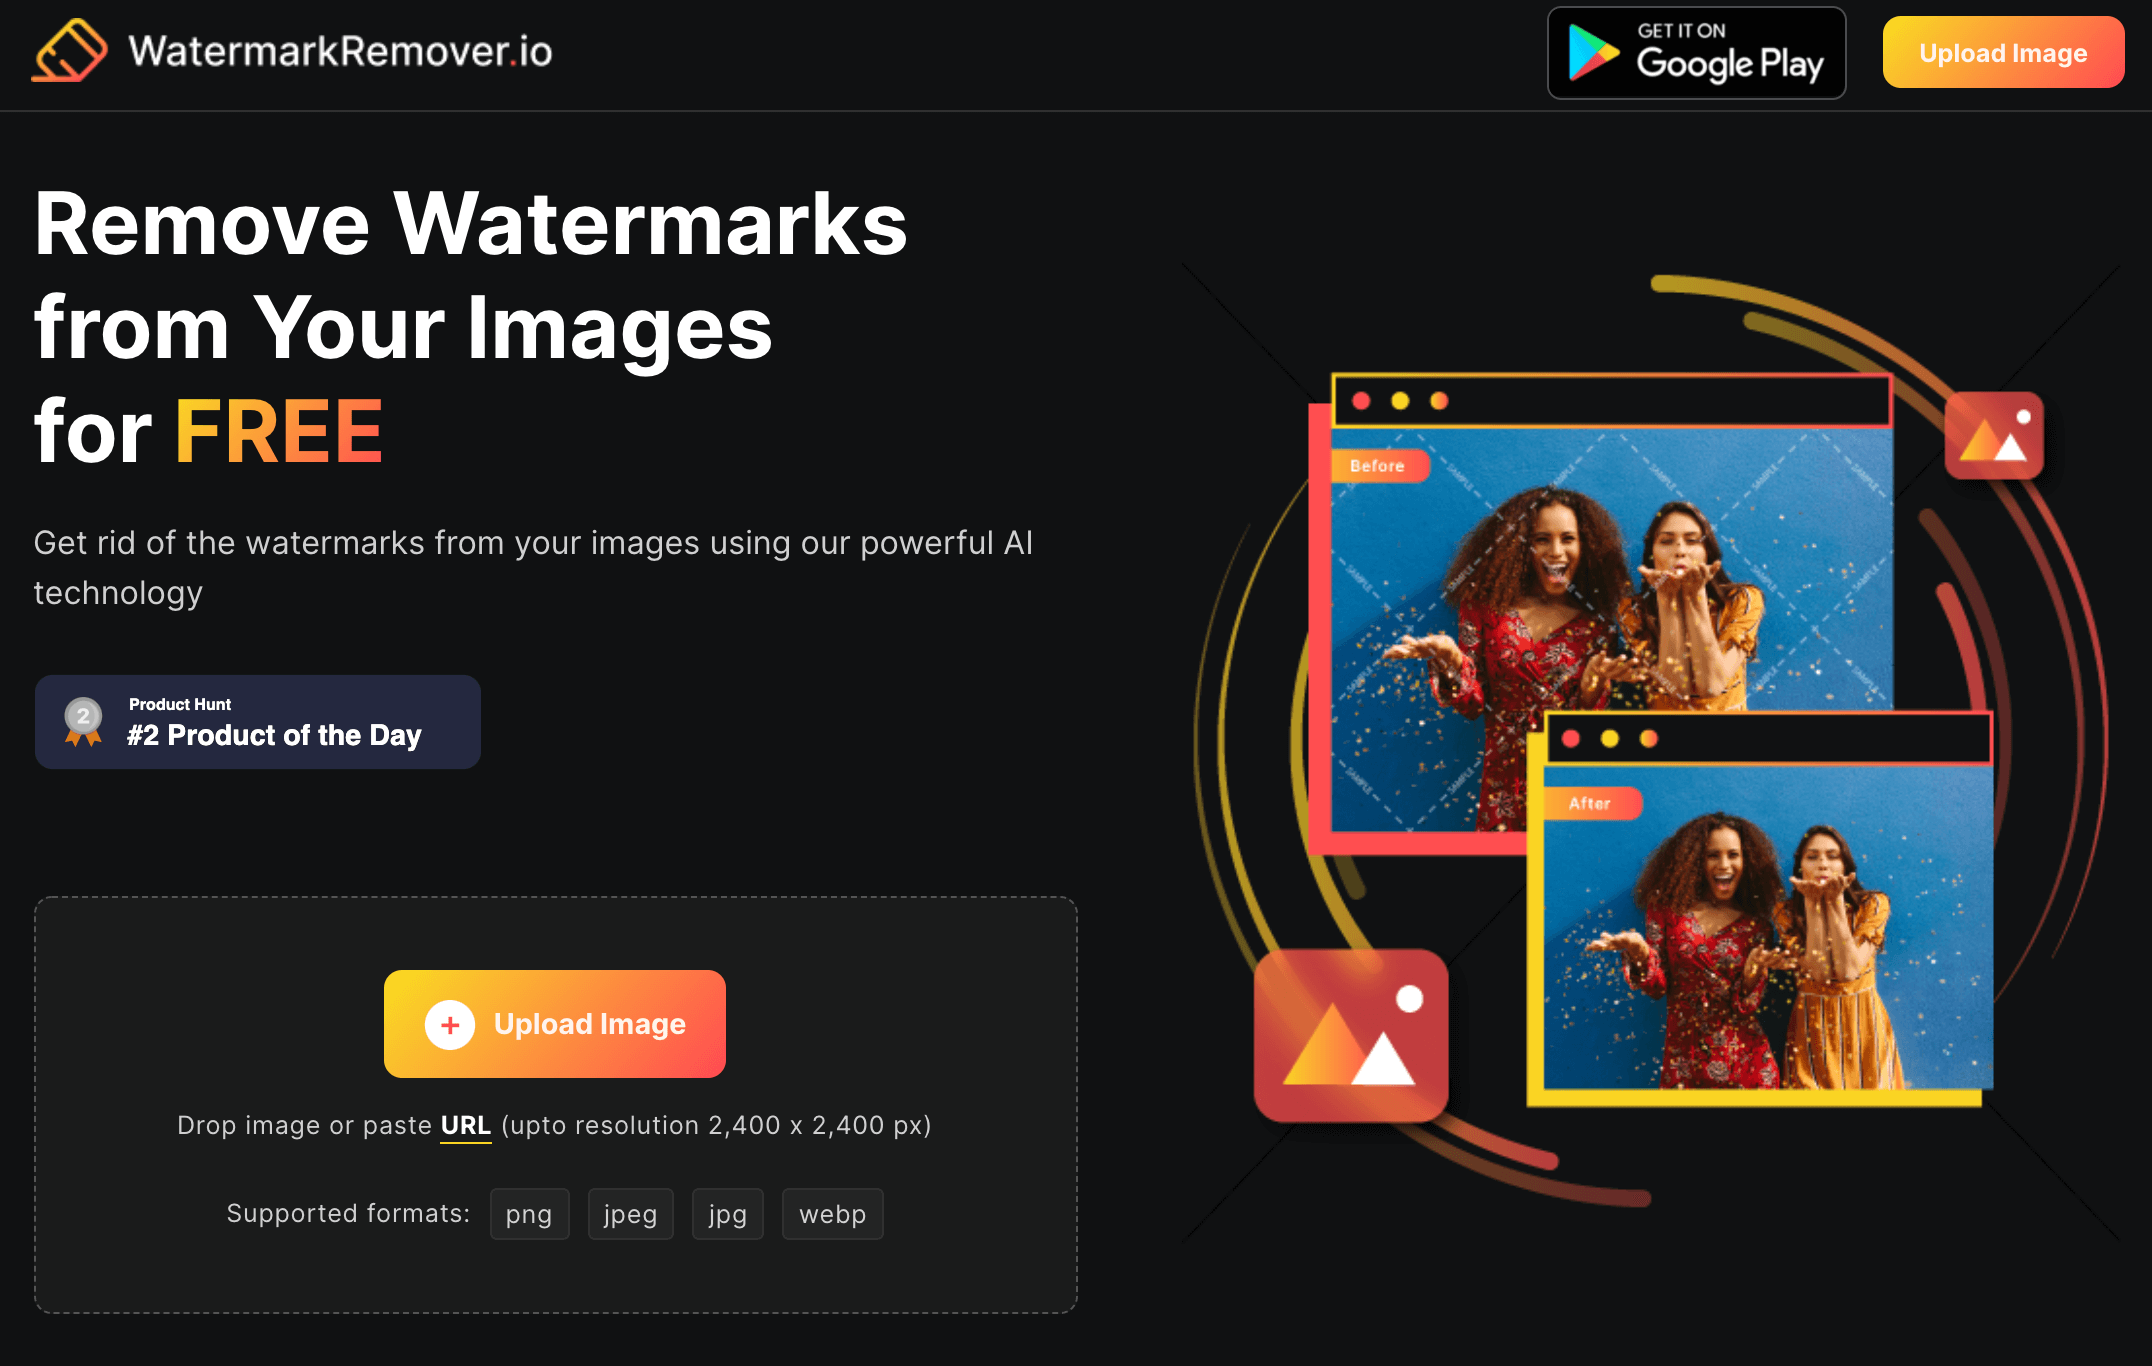 WatermarkRemover.io